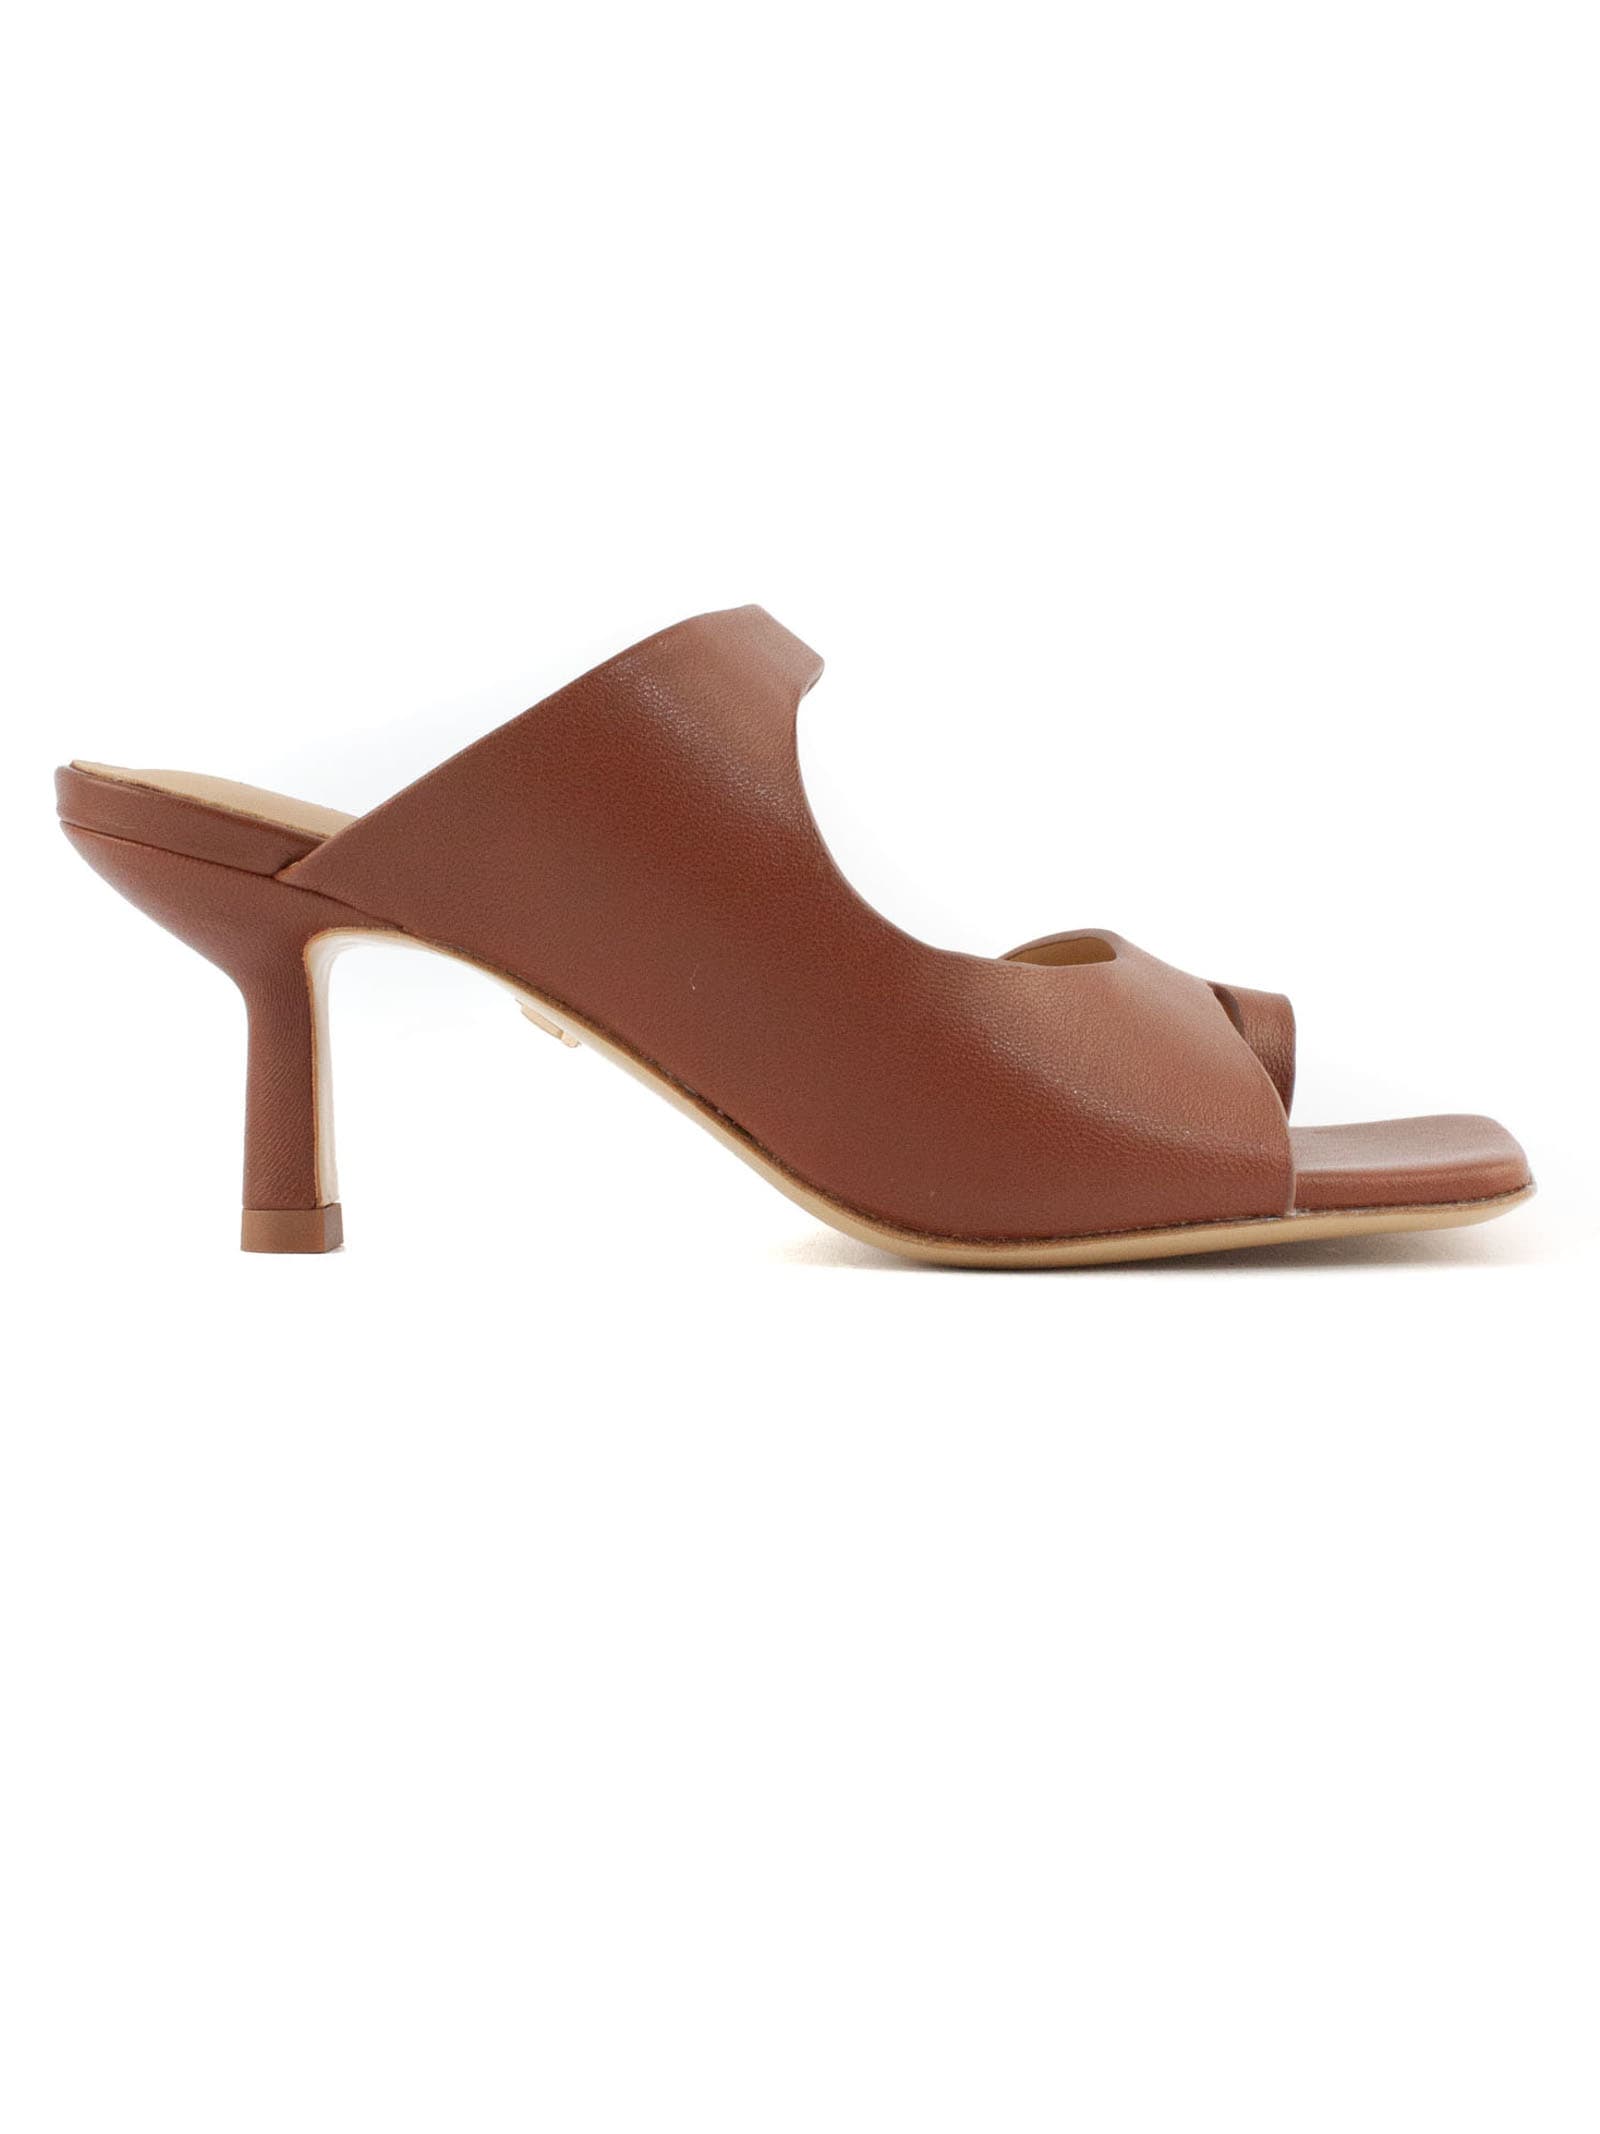 lola cruz brown leather sandal